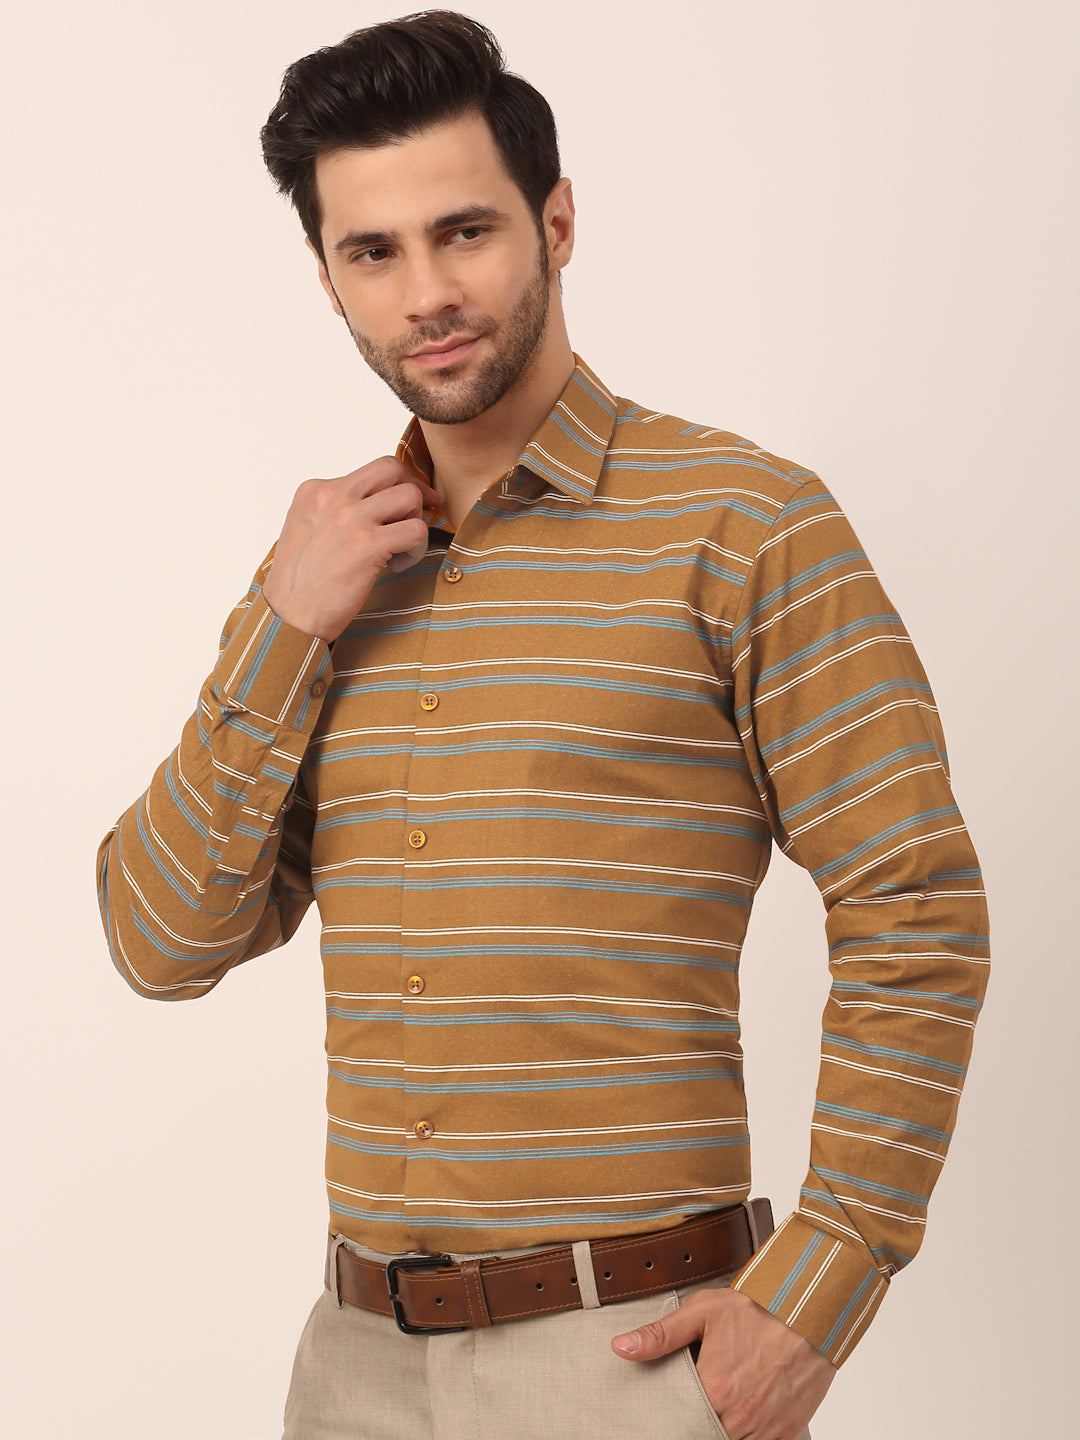 Jainish Men's  Cotton Striped Formal Shirts